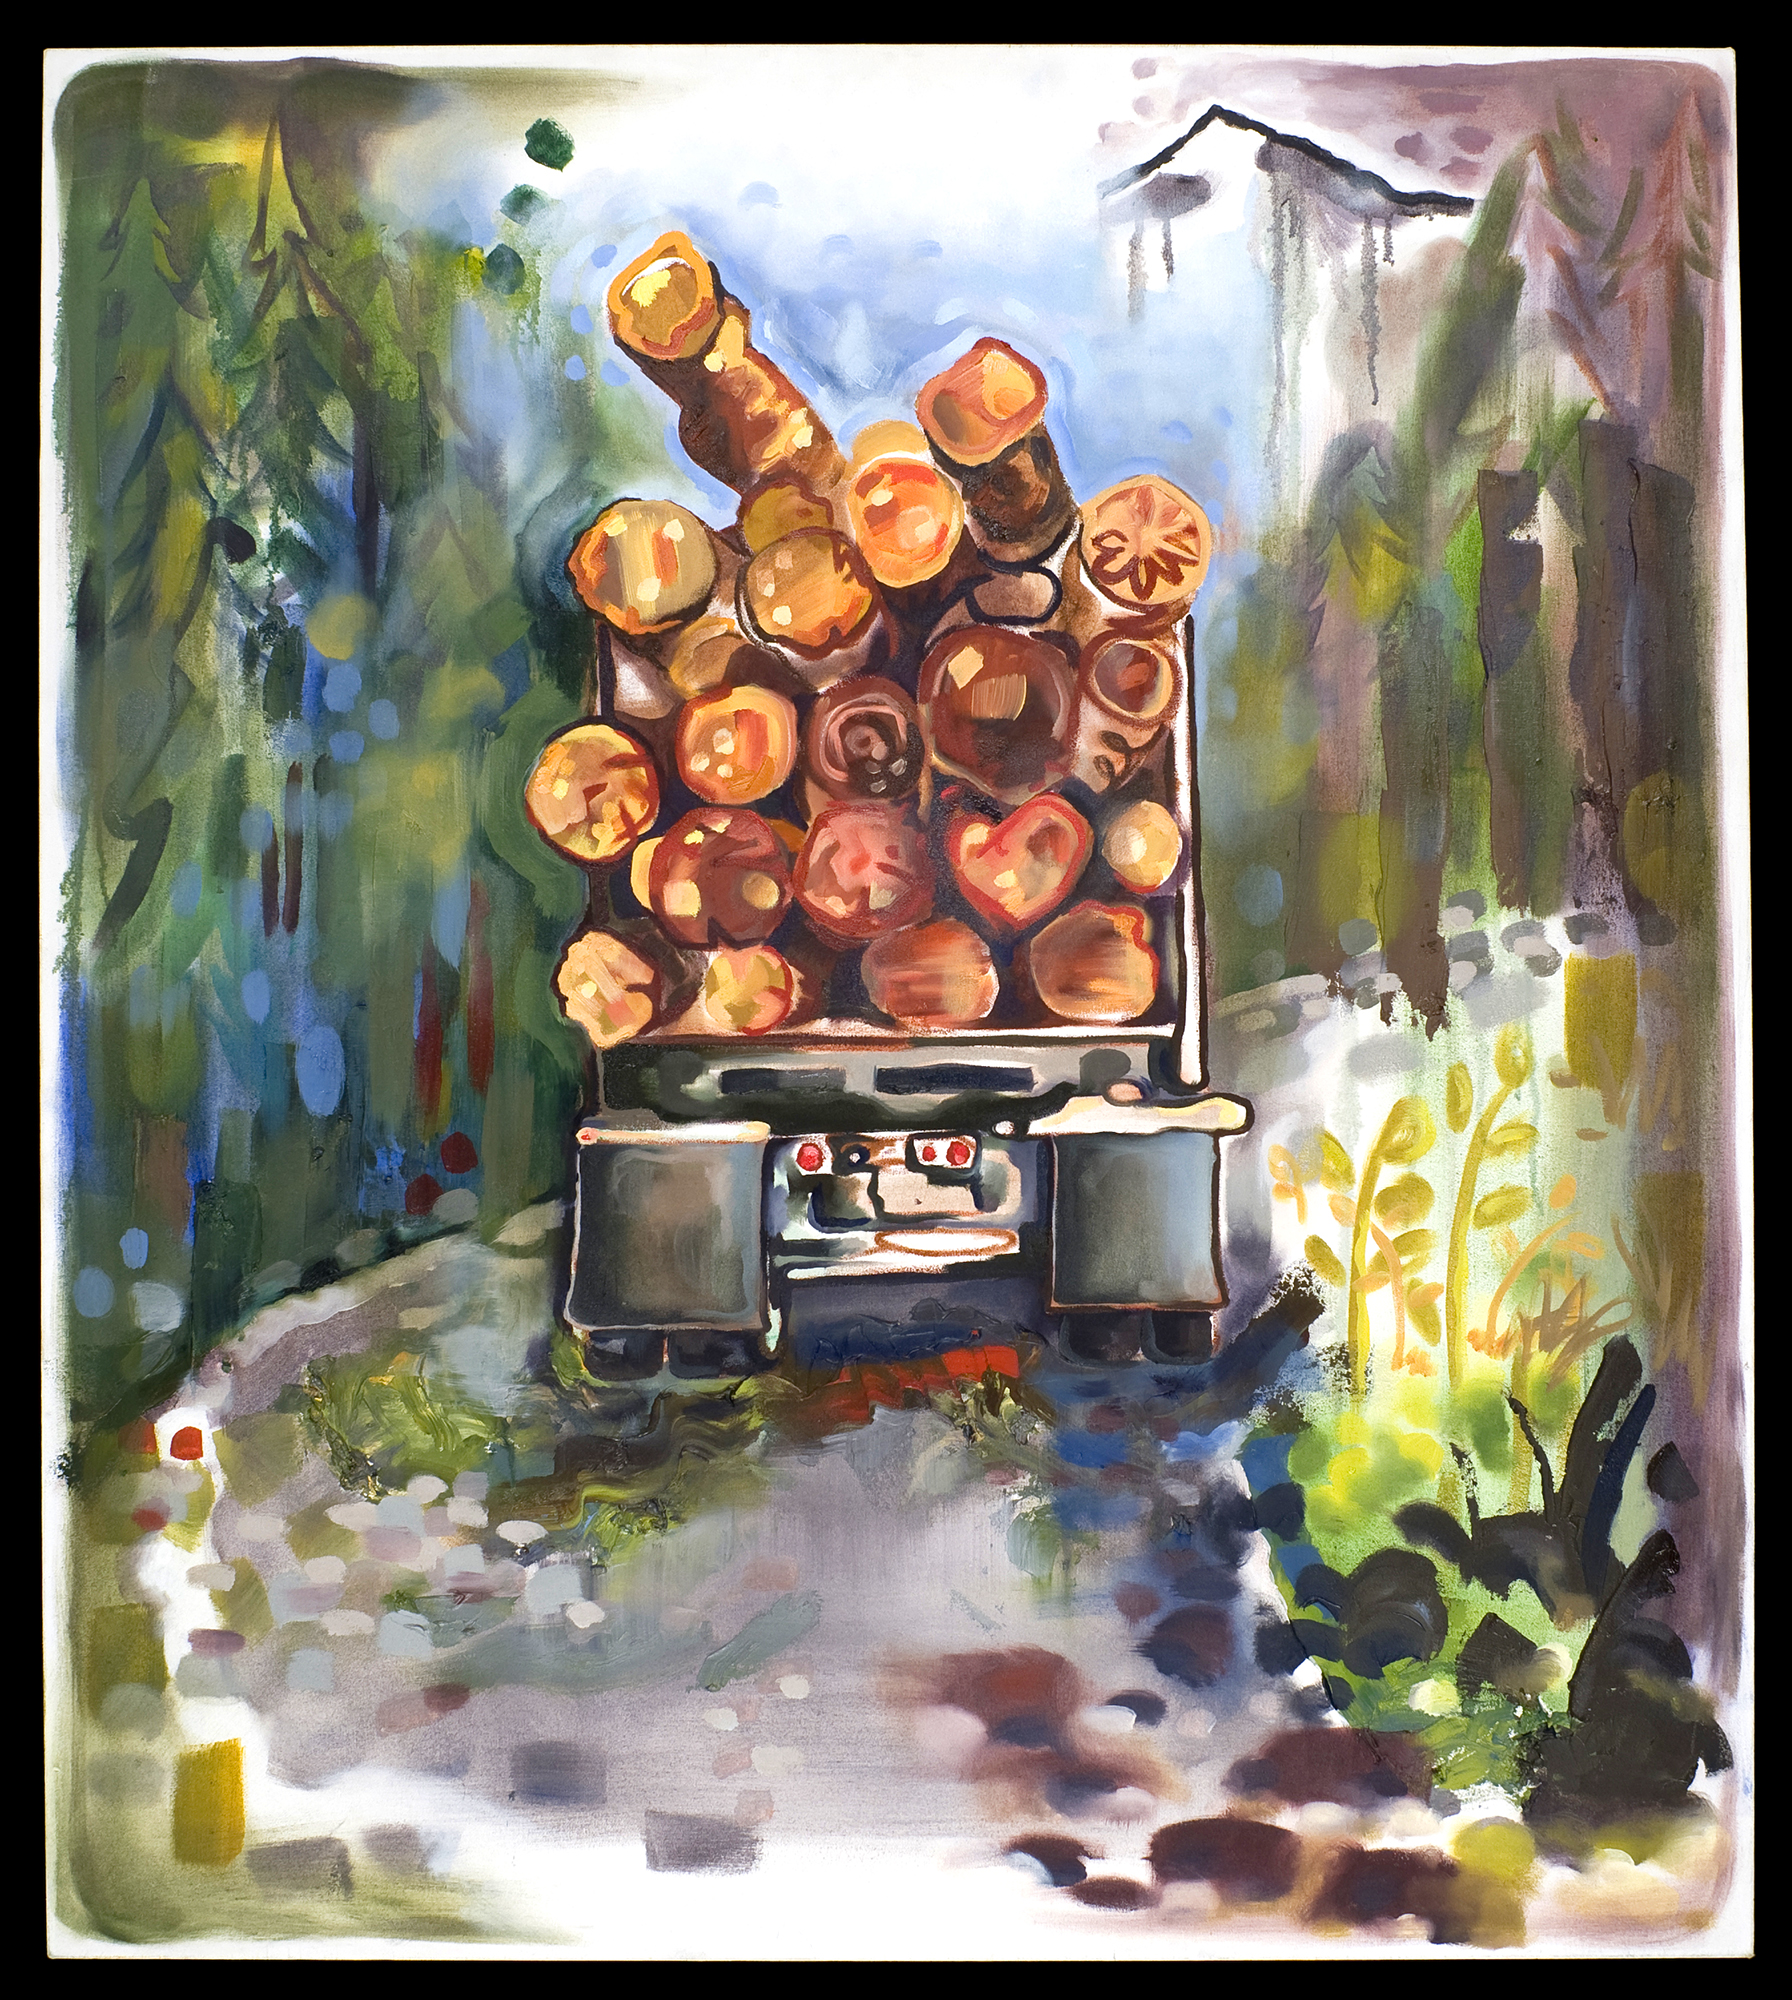 Death Drives a Logging Truck